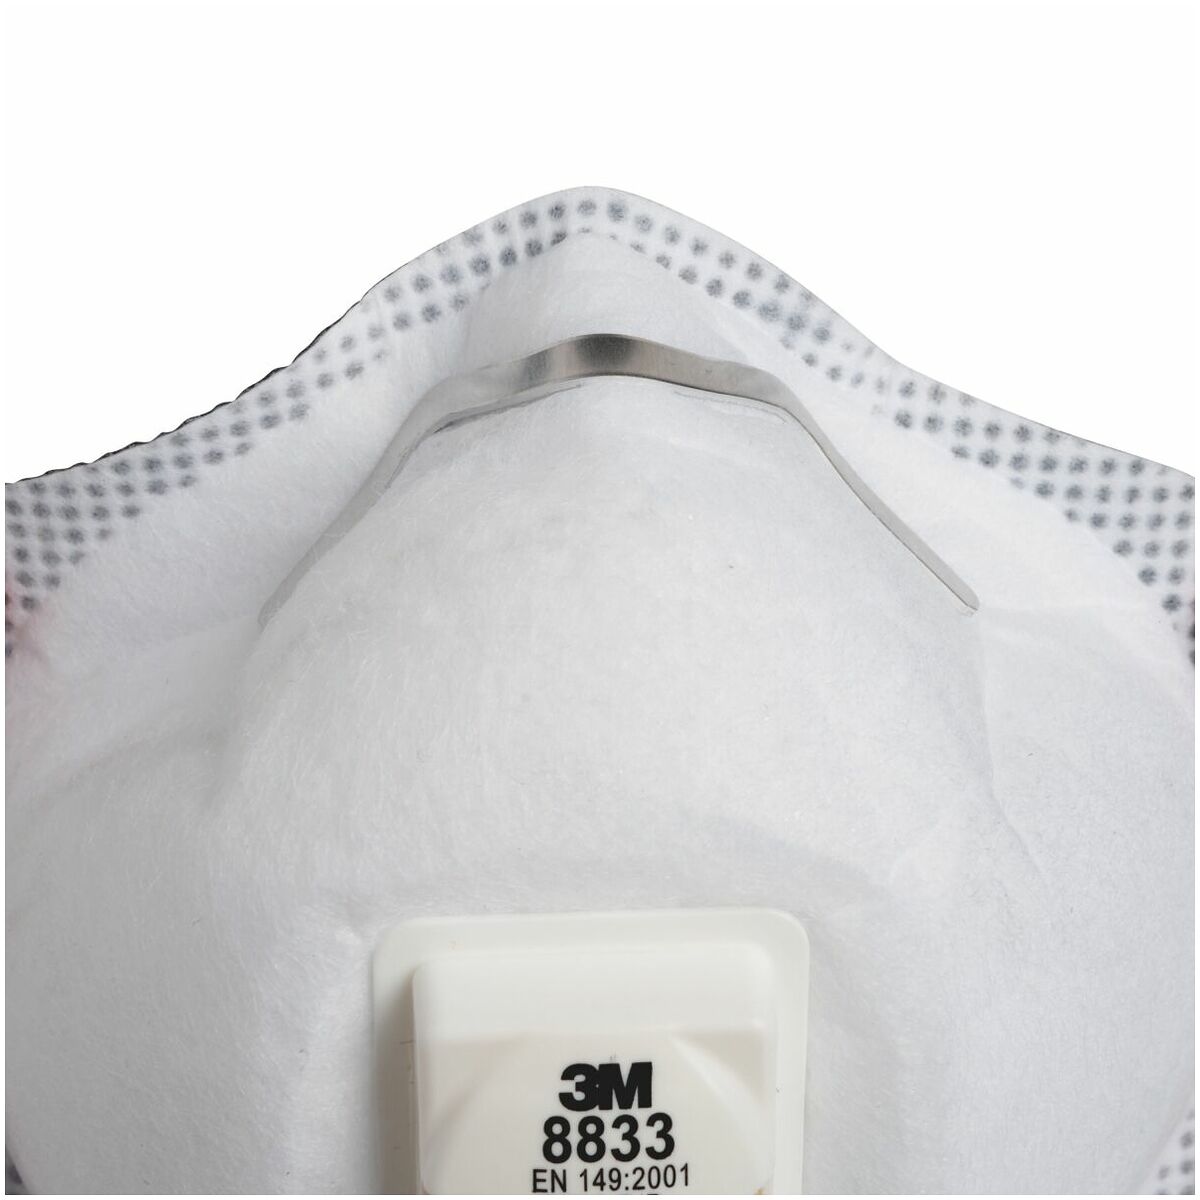 Masque intégral respiratoire FFP3 Luxe GYS 037021